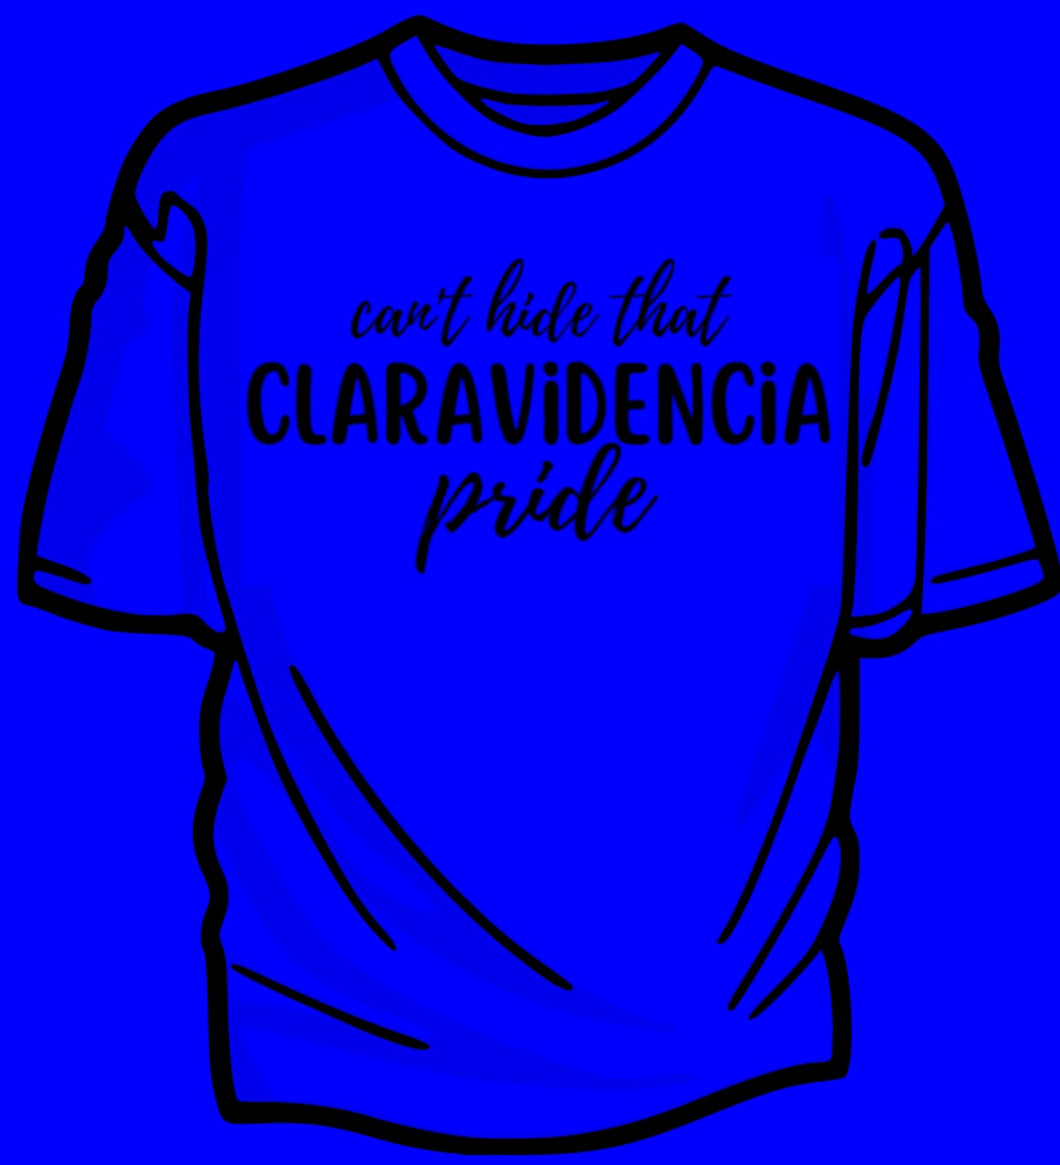 Claravidencia House Shirt